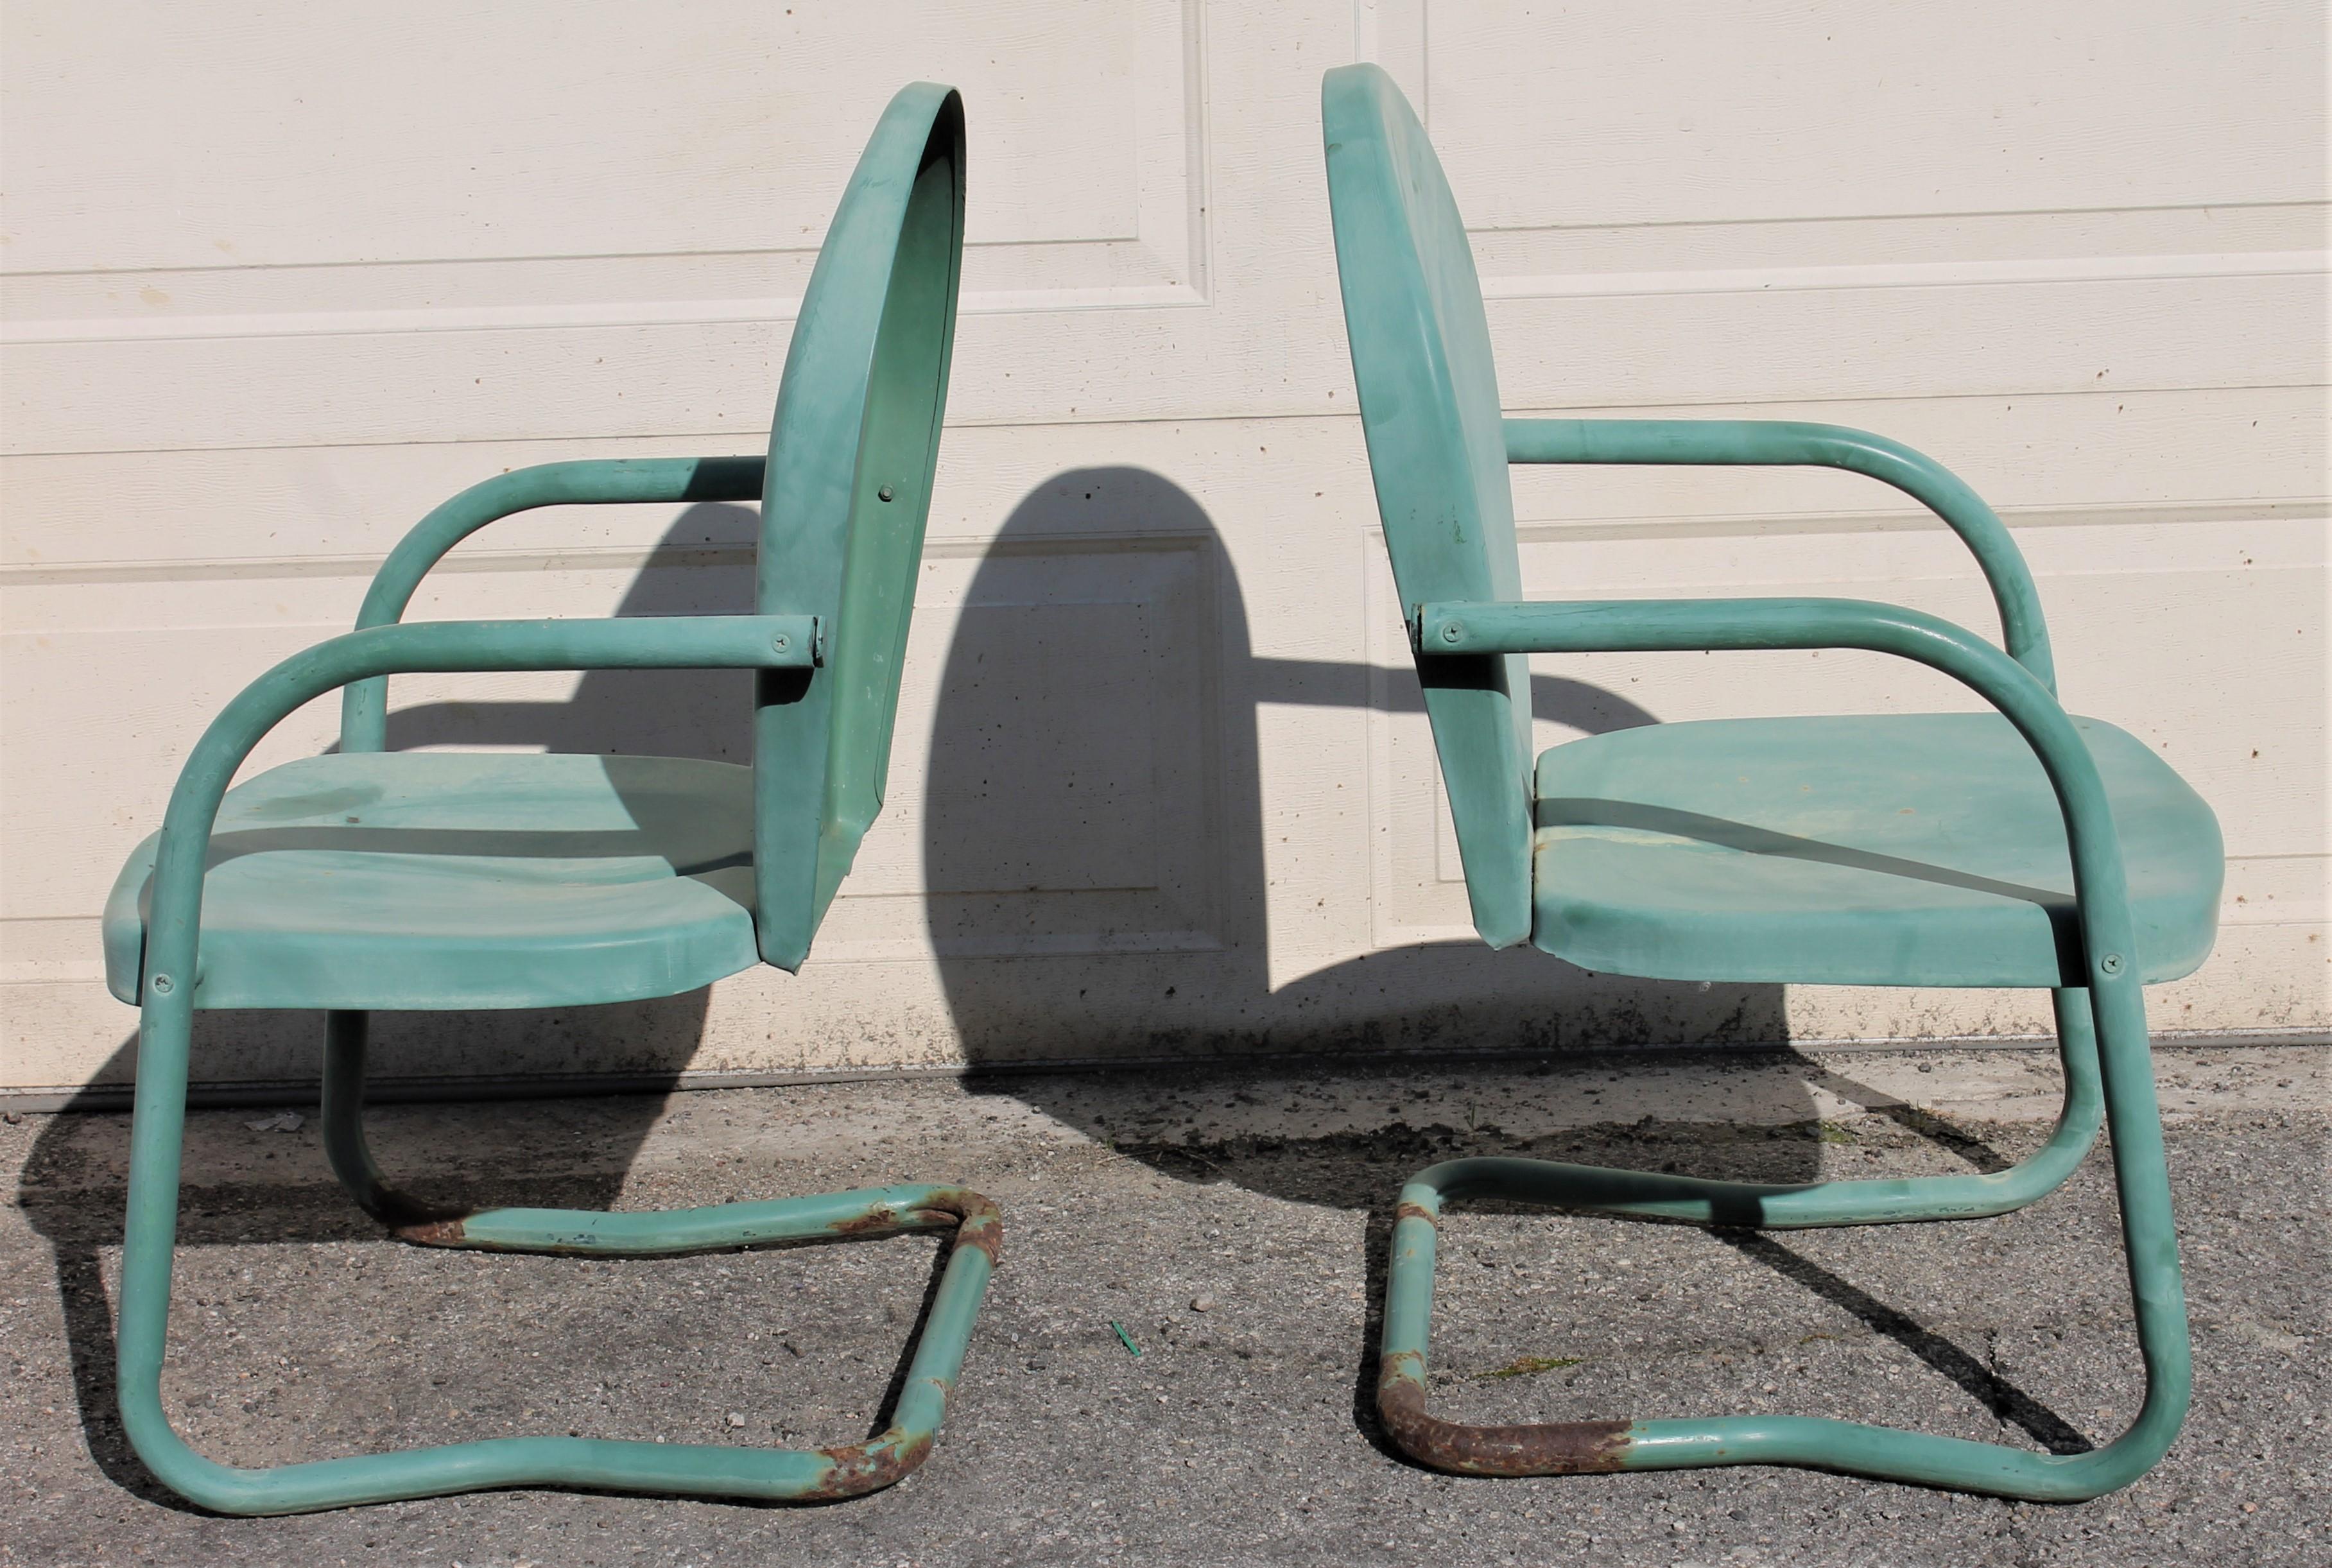 American Outdoor Lawn/ Beach Metal Chairs in Sea Foam Green, 4